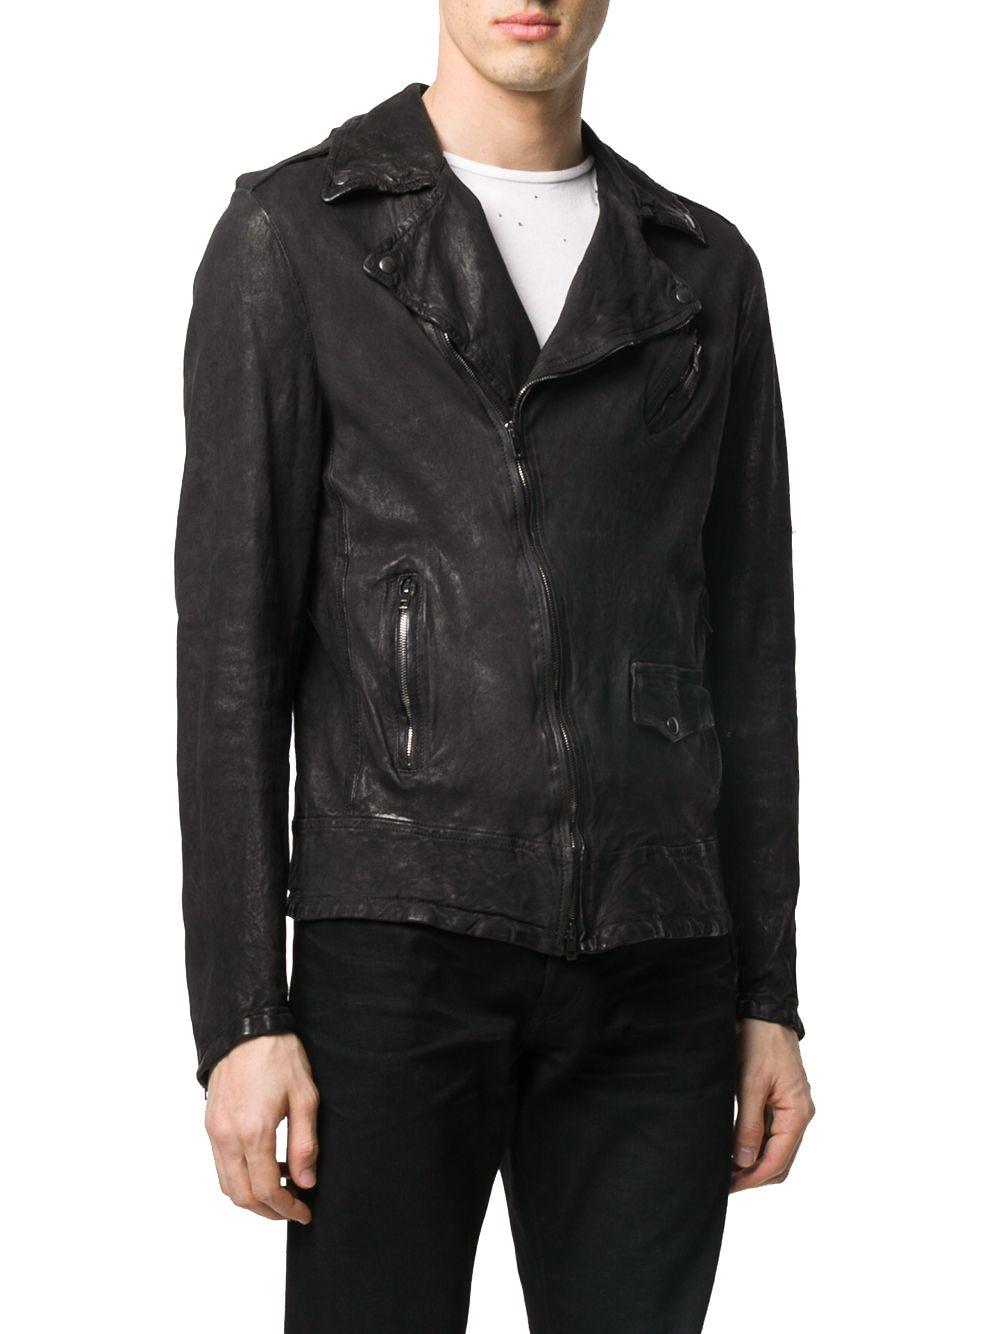 Salvatore Santoro 38528niv Leather Outerwear Jacket in Black for Men - Lyst